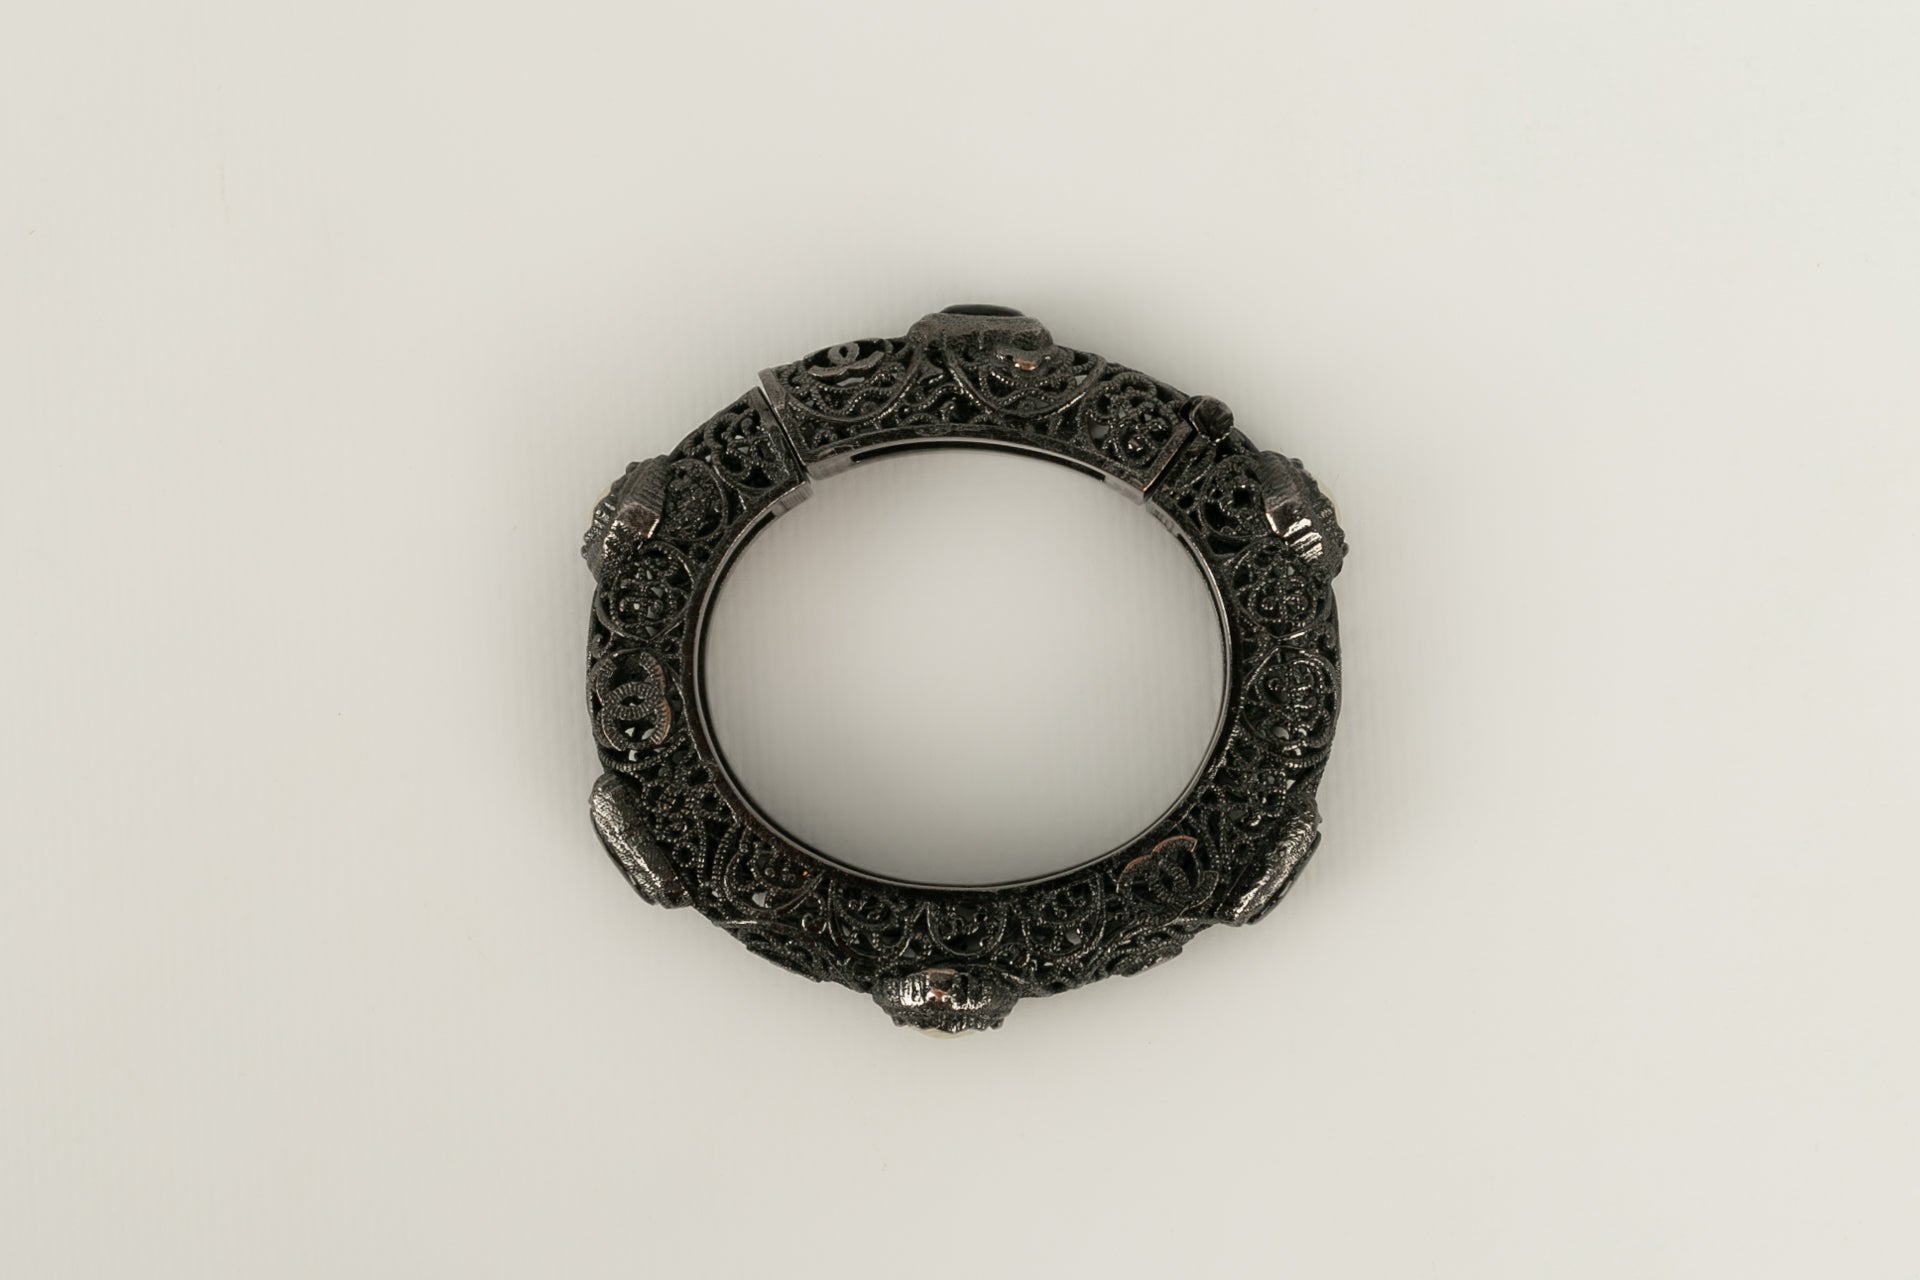 Bracelet Chanel Automne 2011